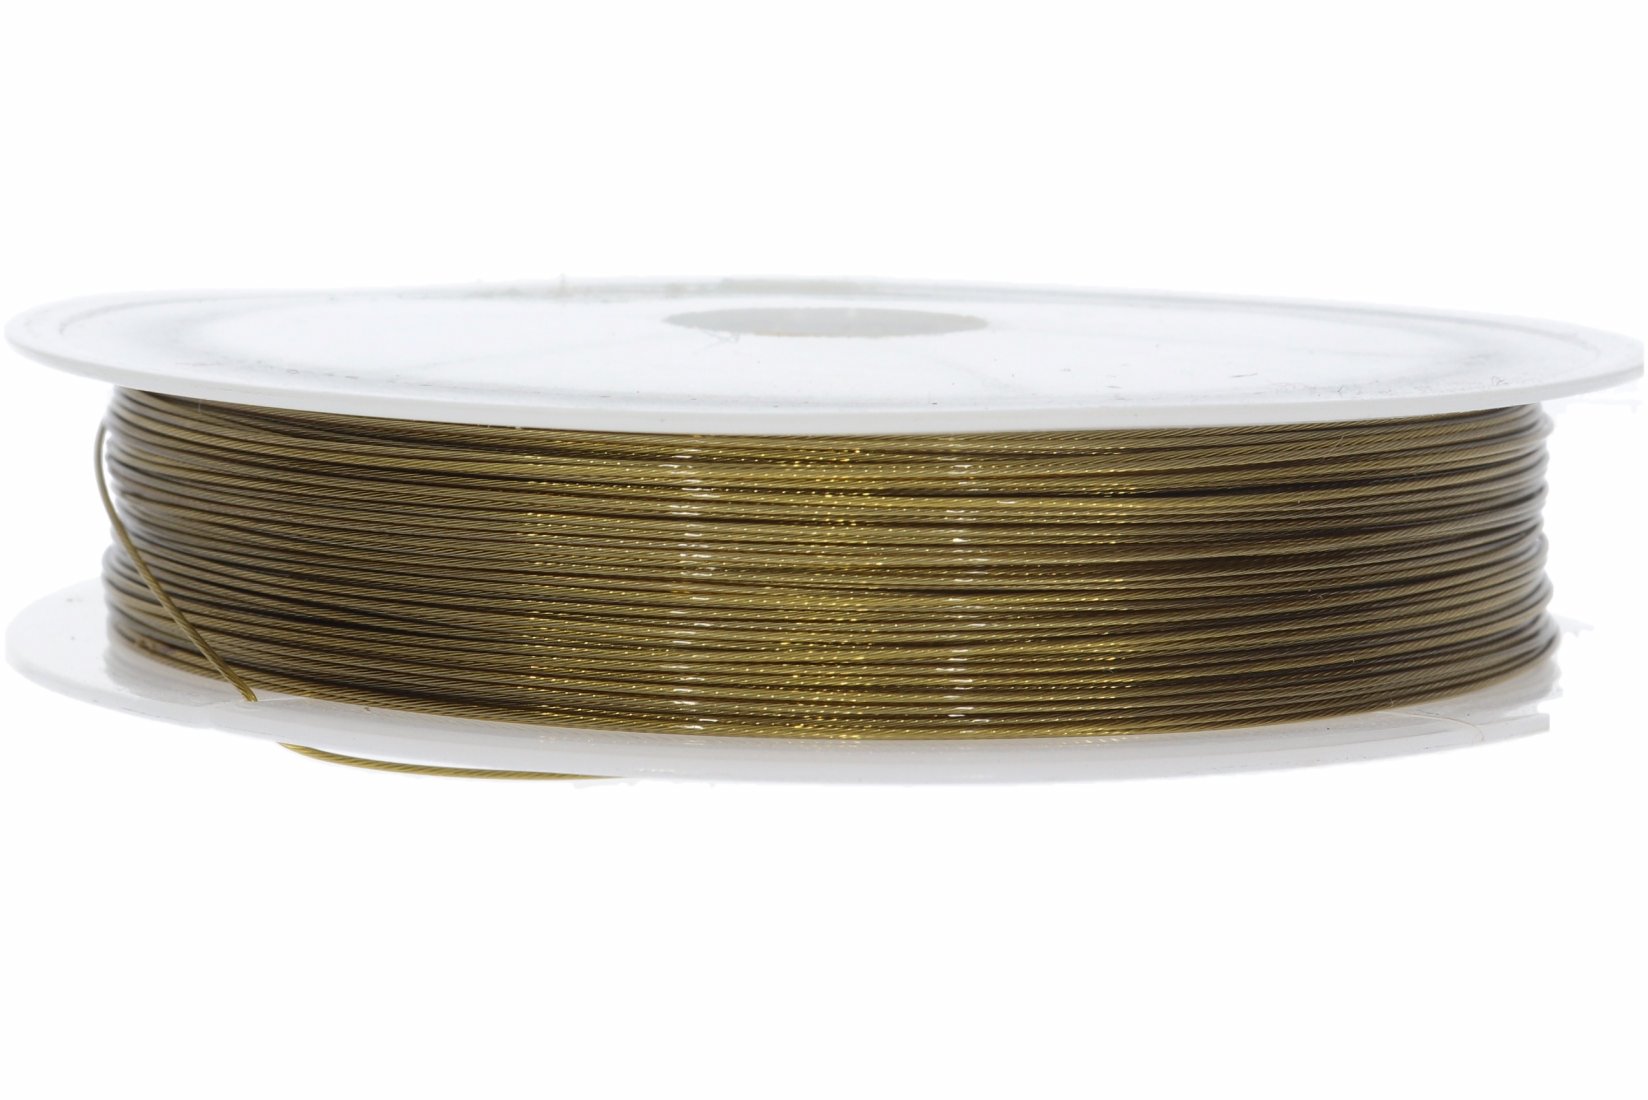 A224 Rolle gold Farben super-soft  Schmuckdraht Basteldraht 0,45mm Ø / 50m